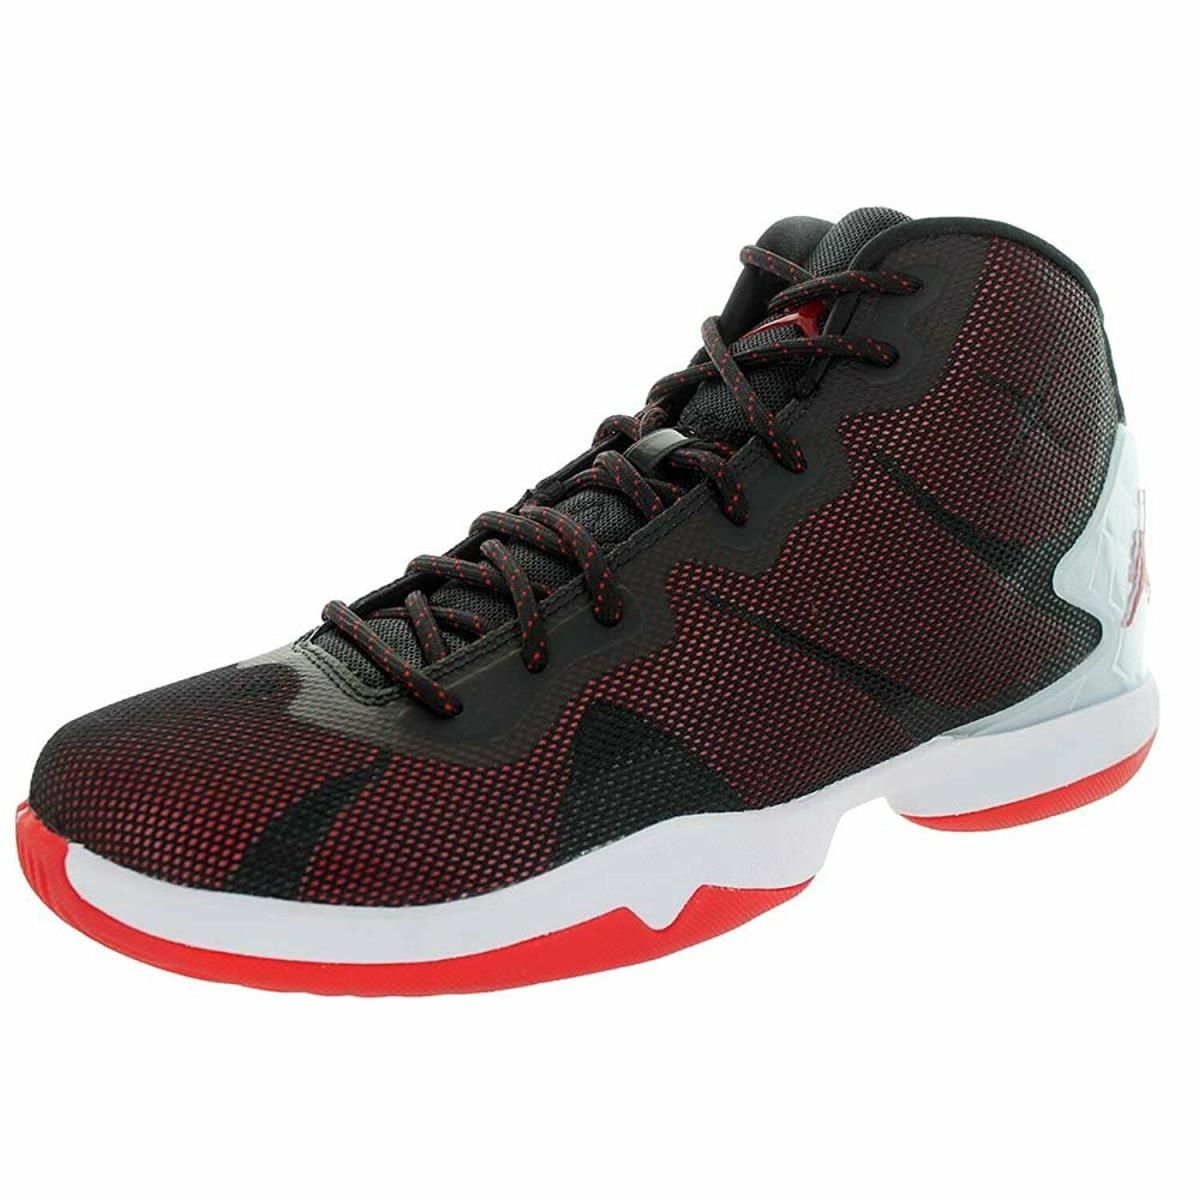 Nike Men s Jordan Super.fly 4 Basketball Shoe Size 11